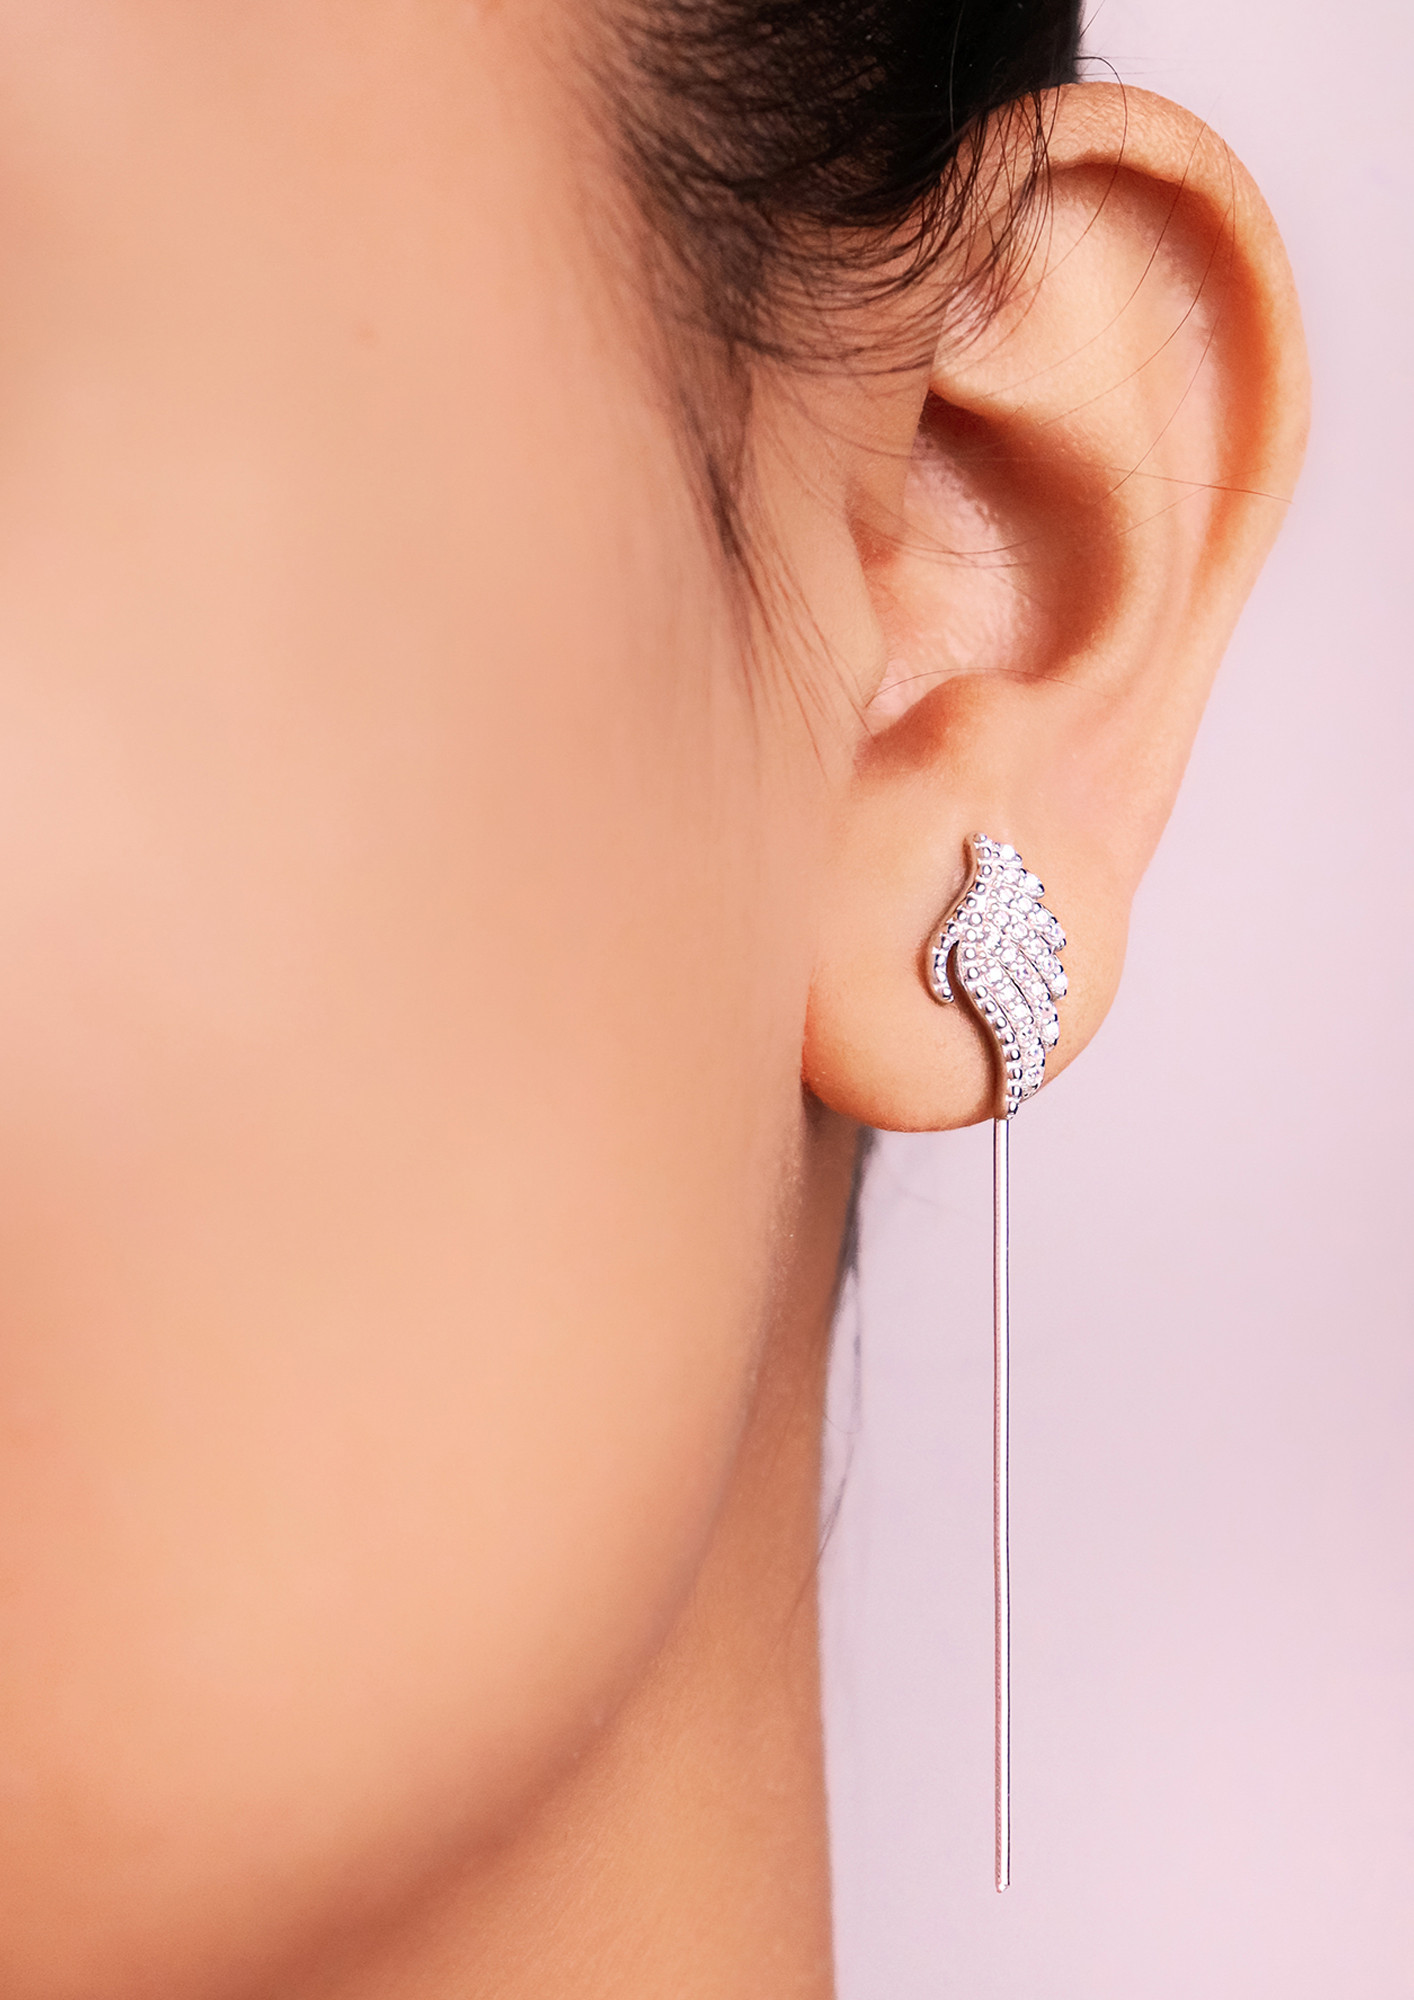 Plain Sterling Silver 20x20mm Hoop Earrings by BeYindi